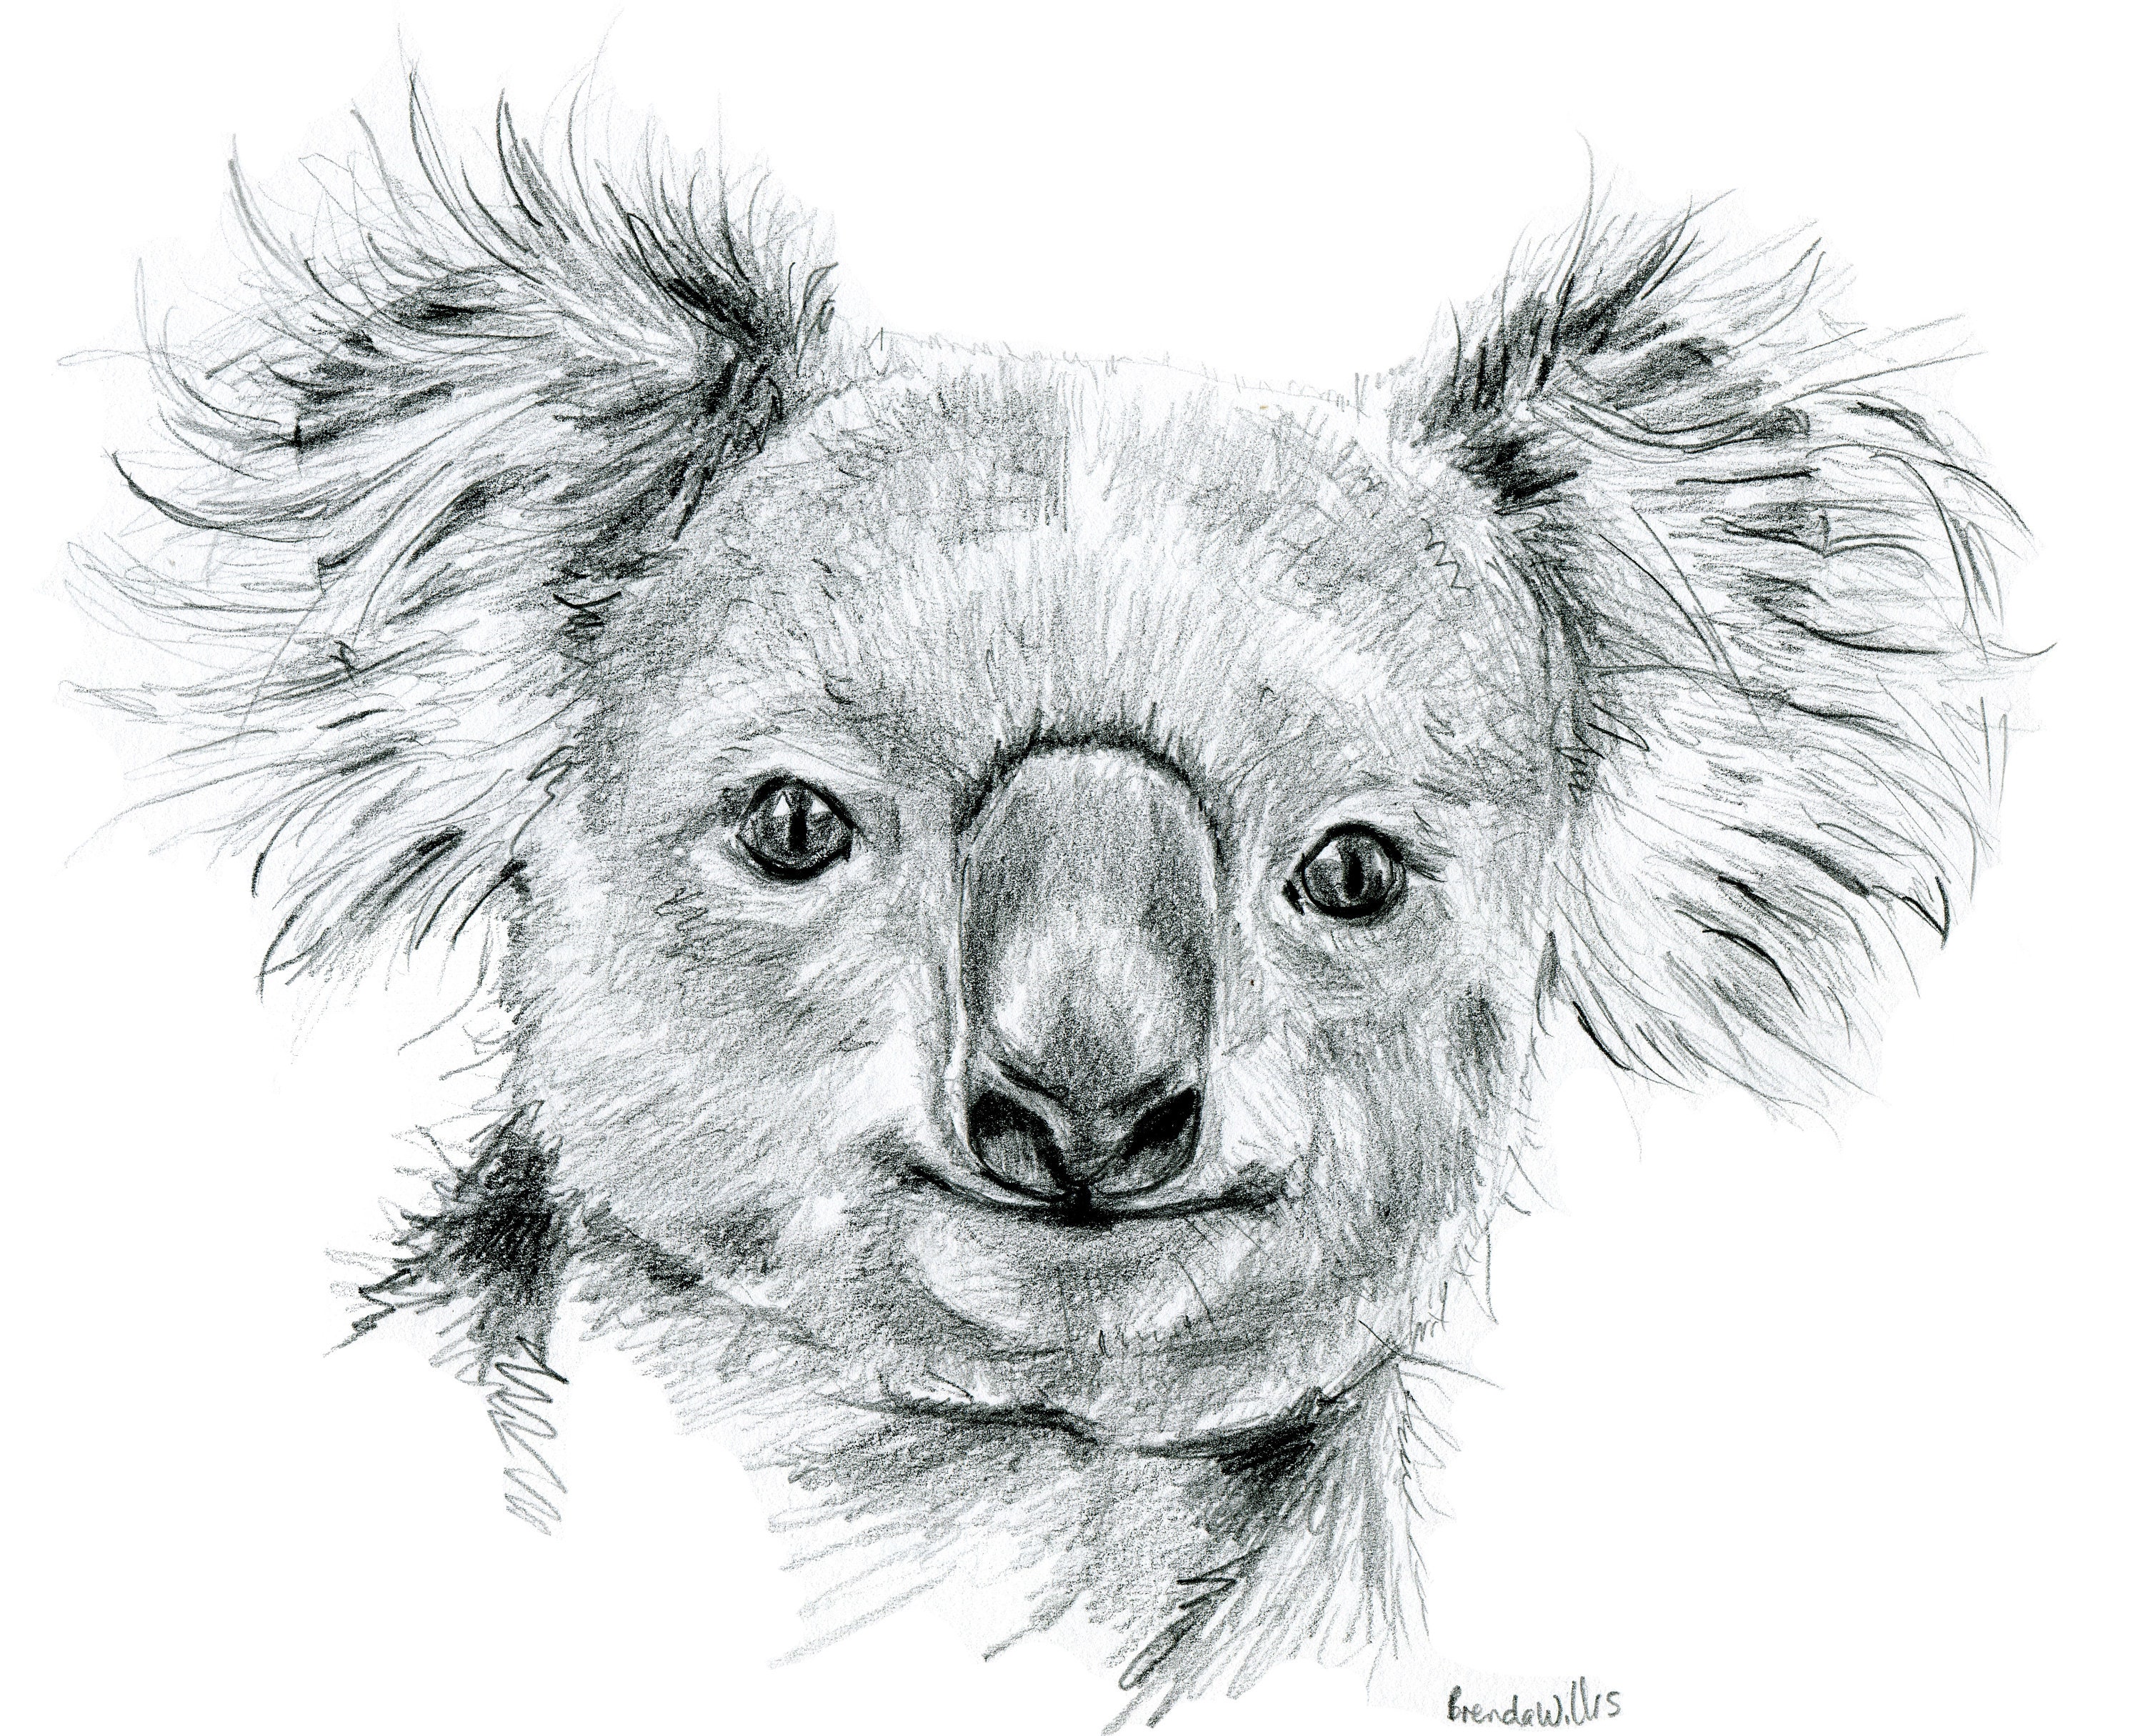 Learn How to Draw a Koala in x Steps